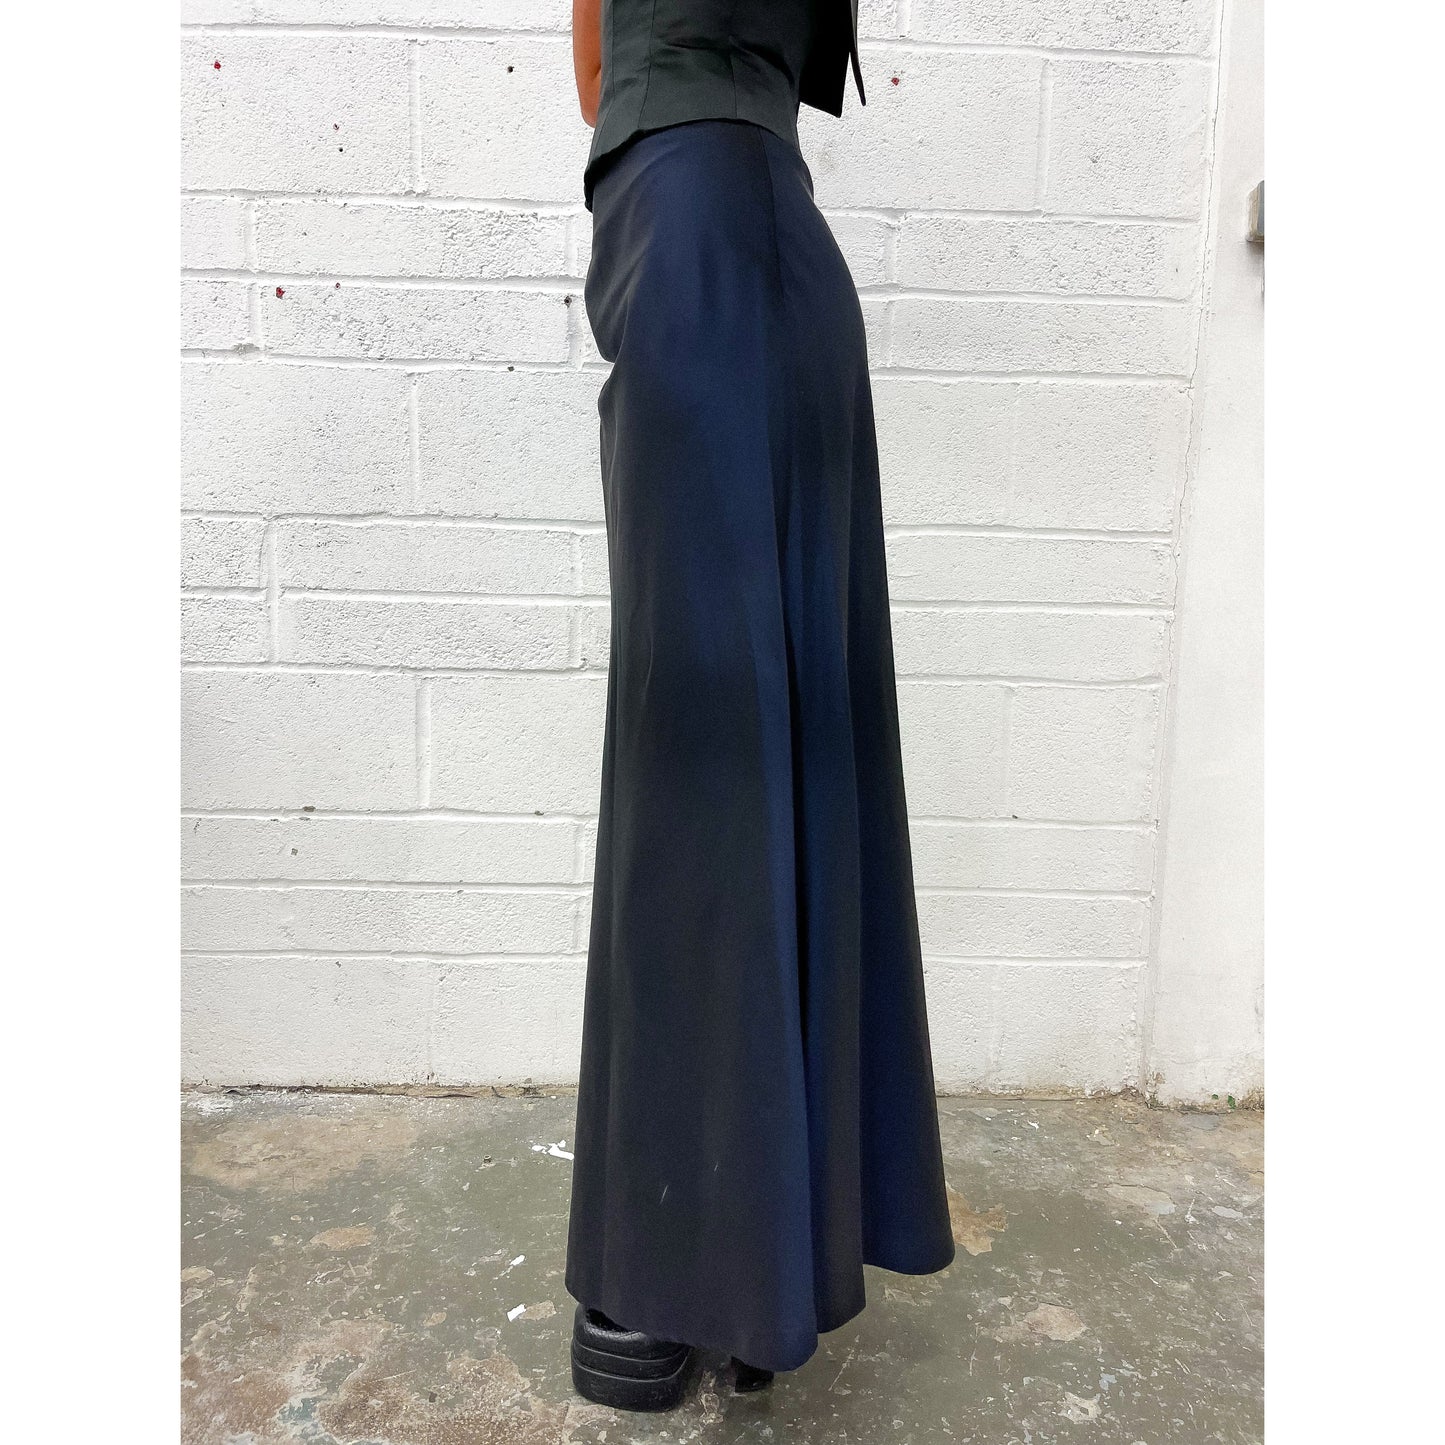 GOTTFRIED Couture Navy Skirt UK 8 - 10